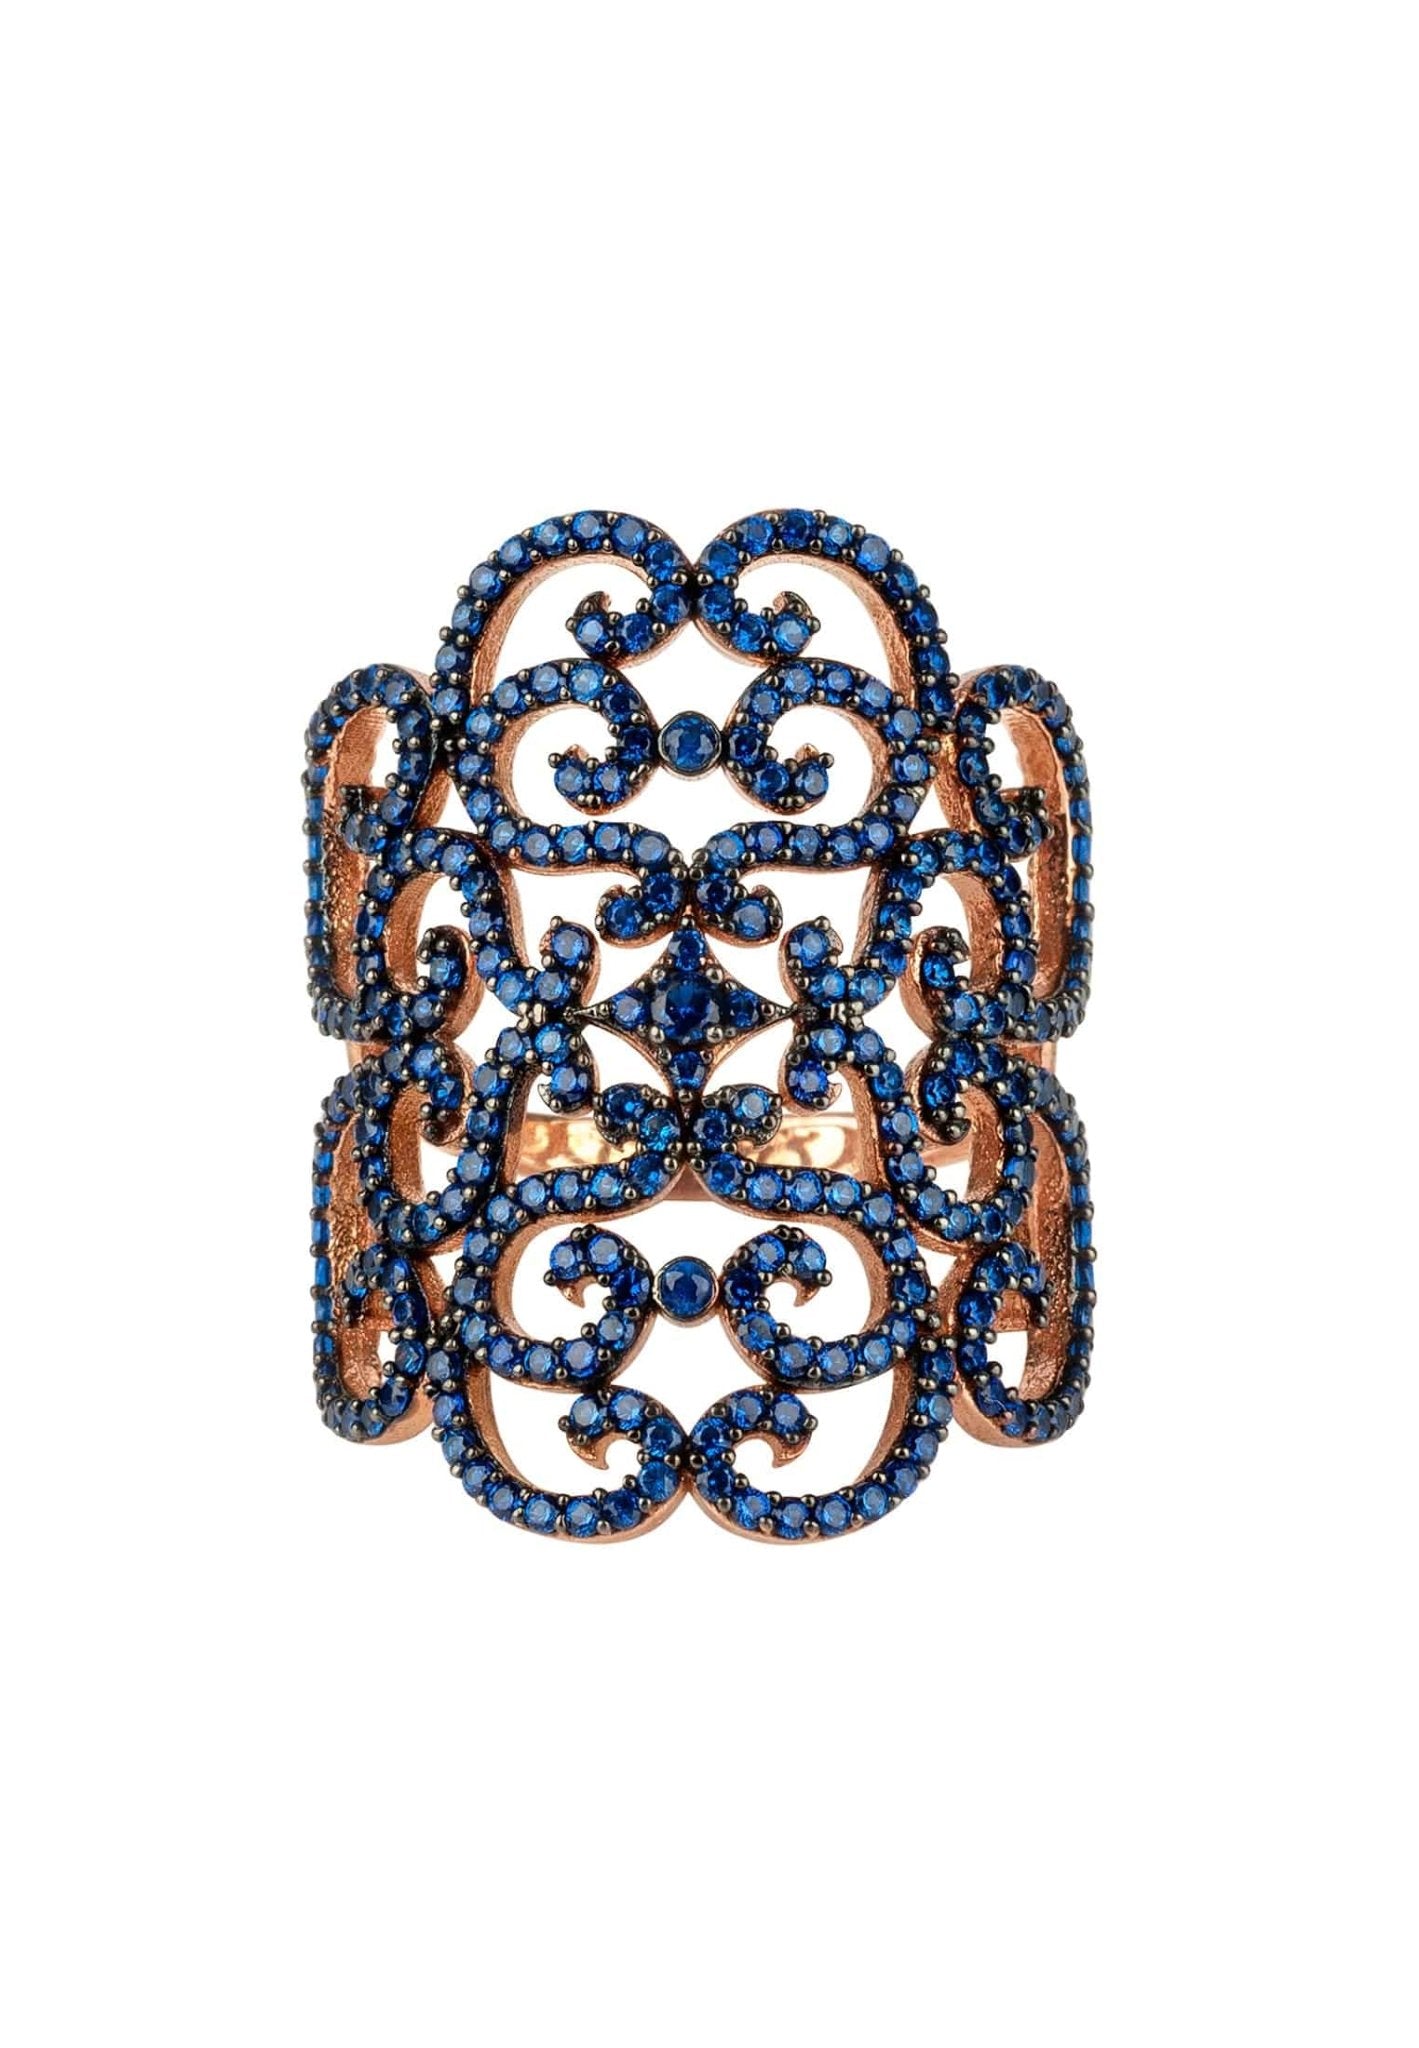 Countess Filigree Cocktail Ring Sapphire Blue Rosegold - LATELITA Rings